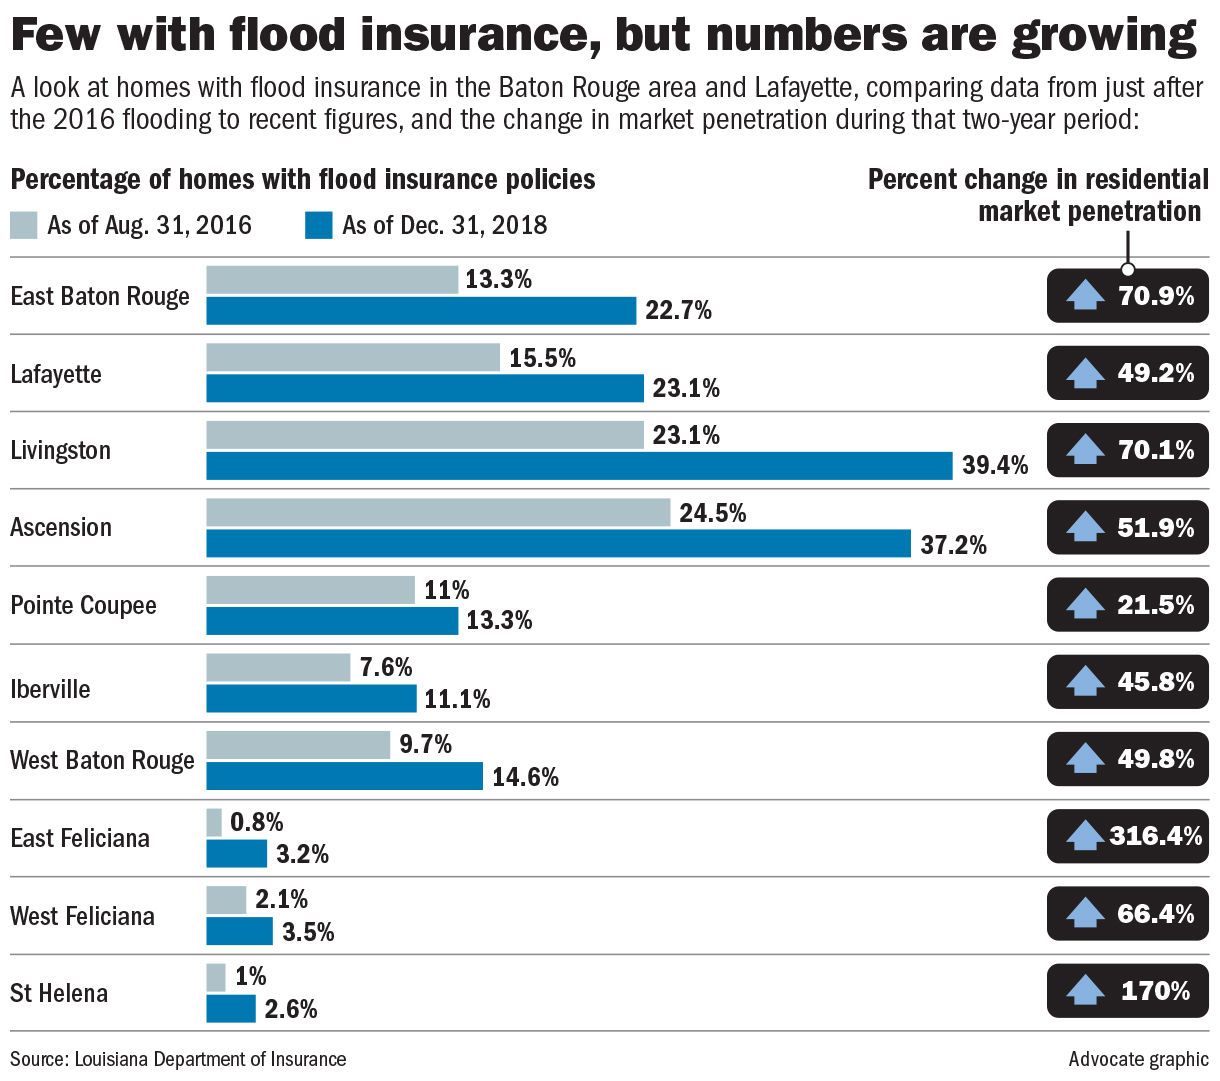 zone ve flood insurance cost